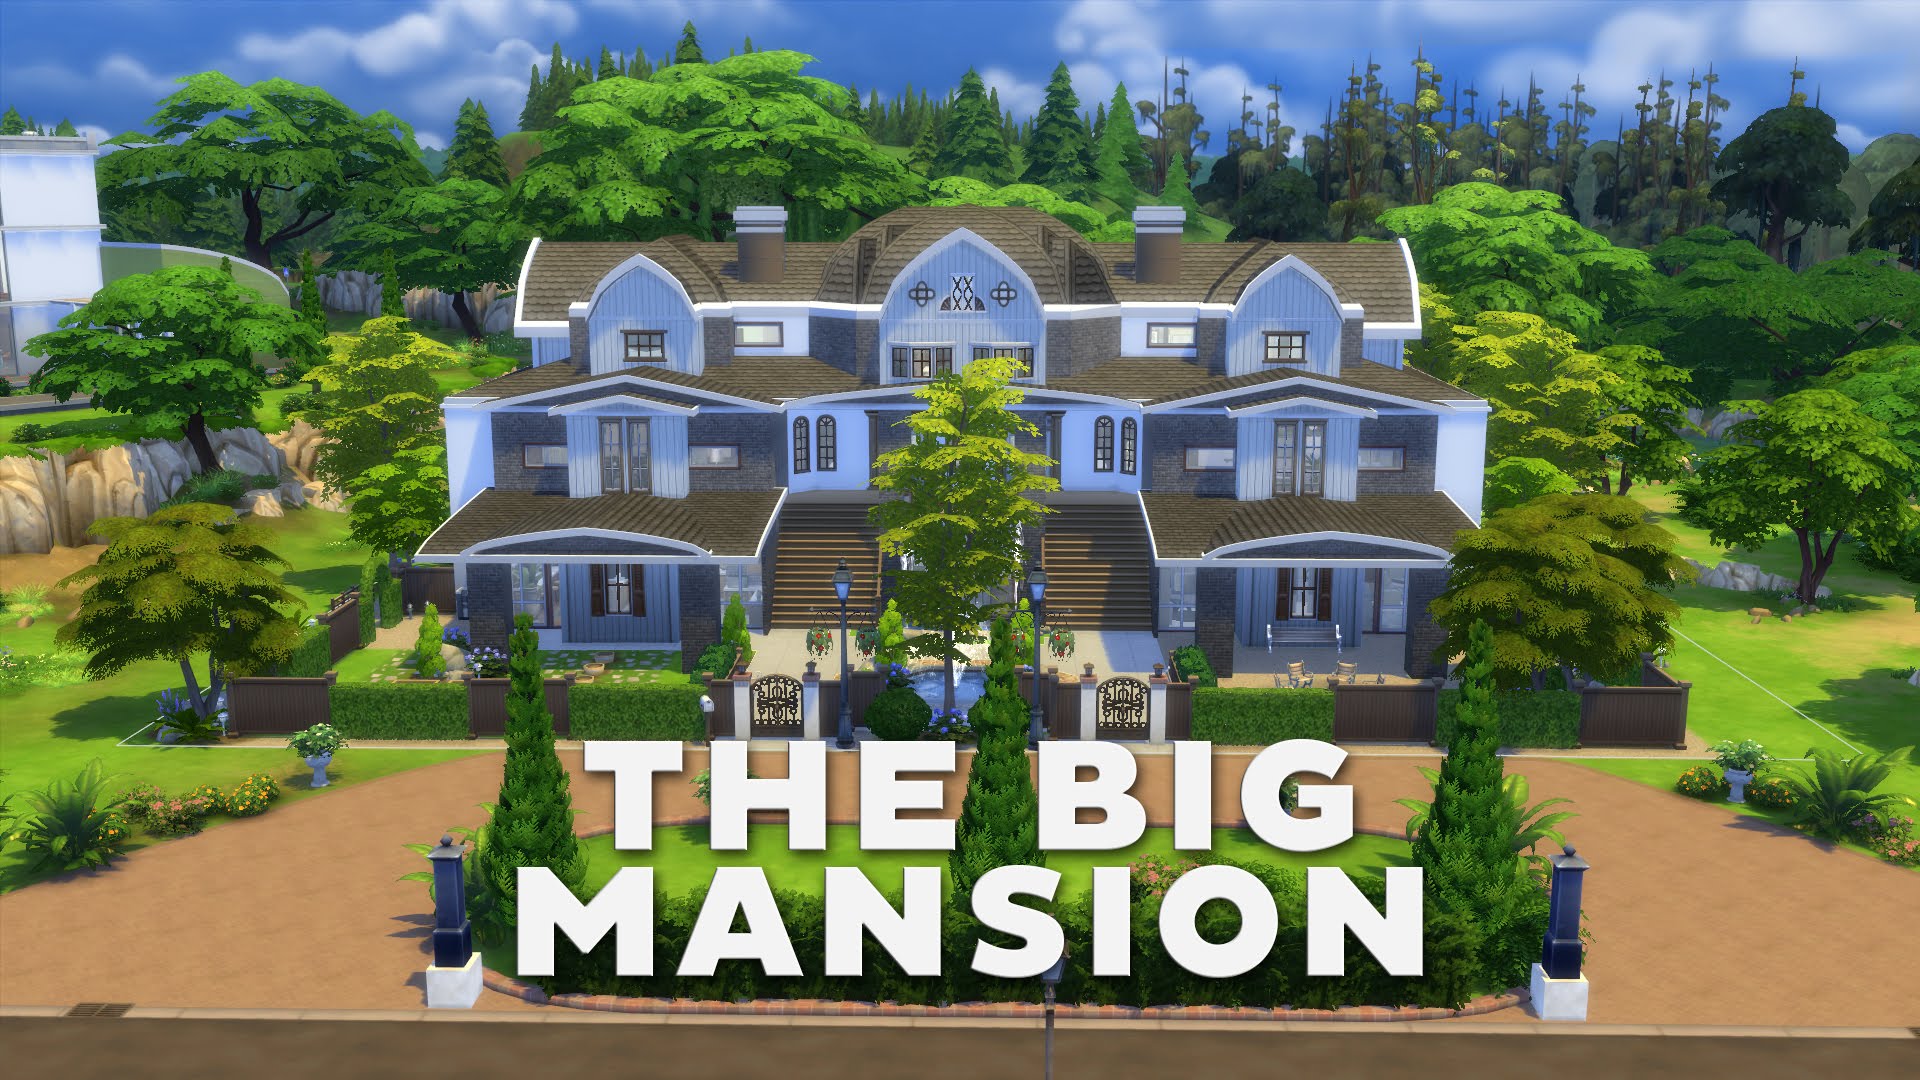 THE BIG MANSION - Die Sims 4 HAUSBAU // The Sims 4 housebuilding ...